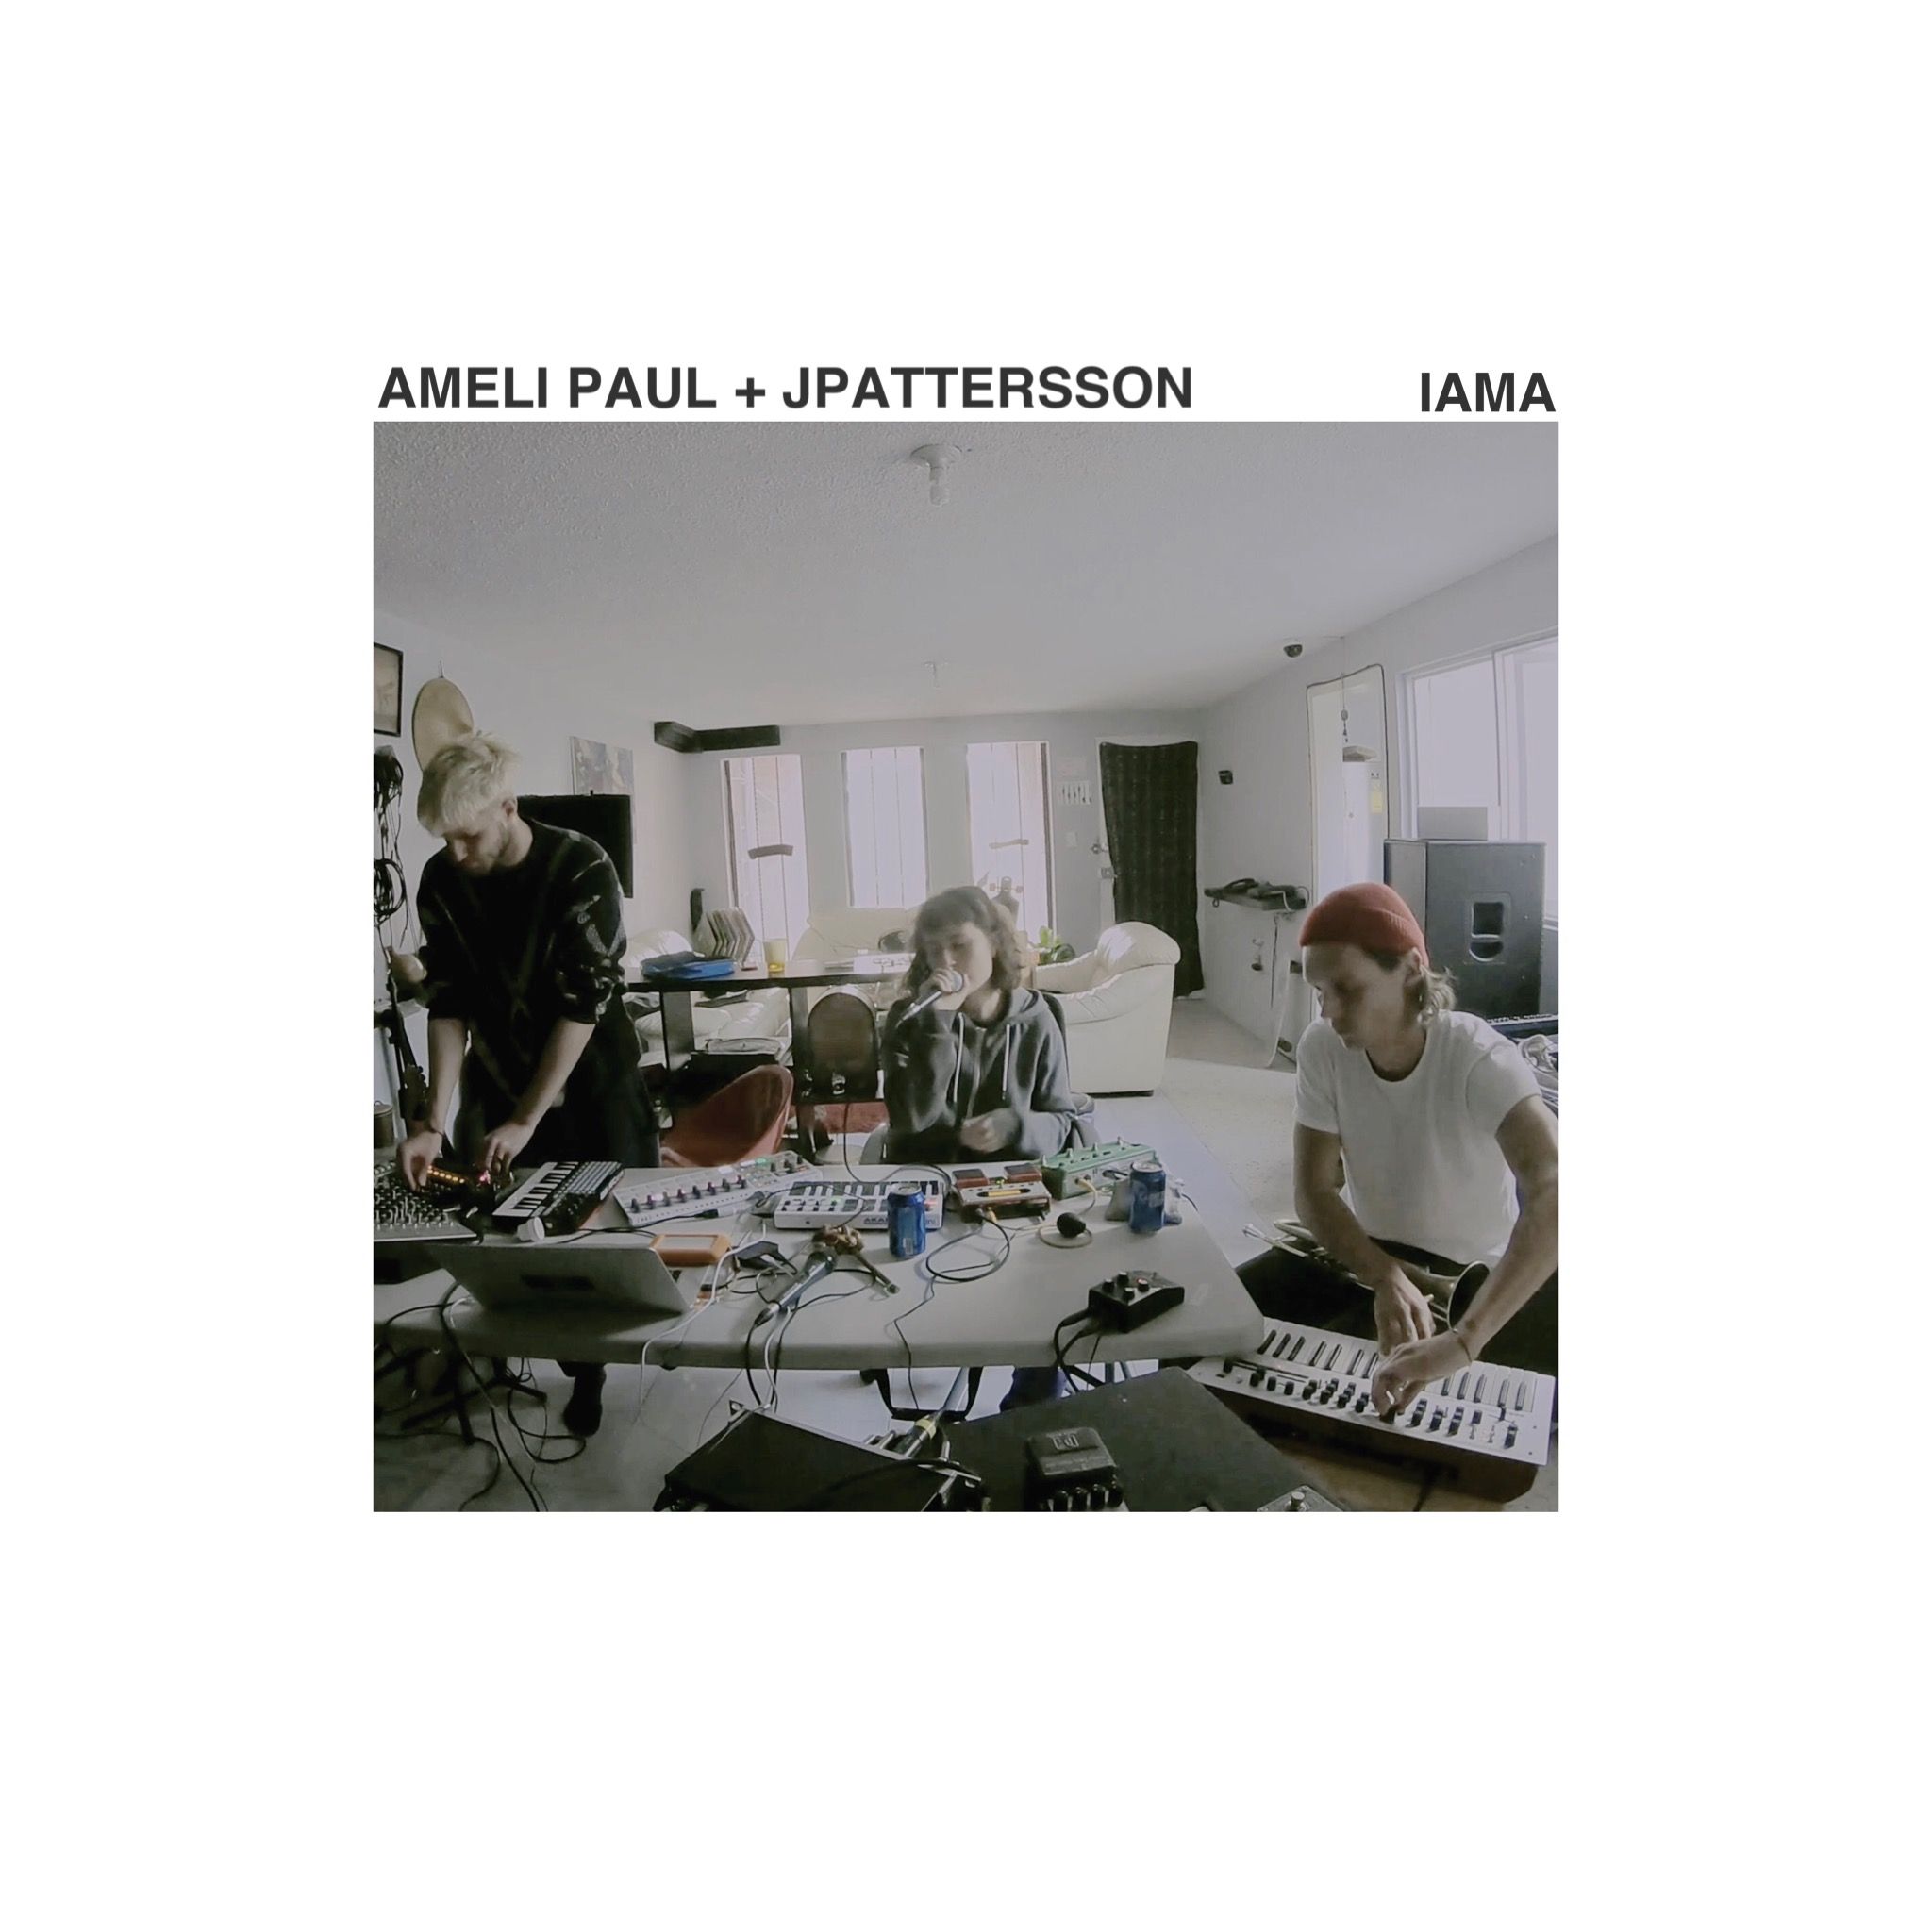 डाउनलोड करा Ameli Paul + JPattersson - Iama